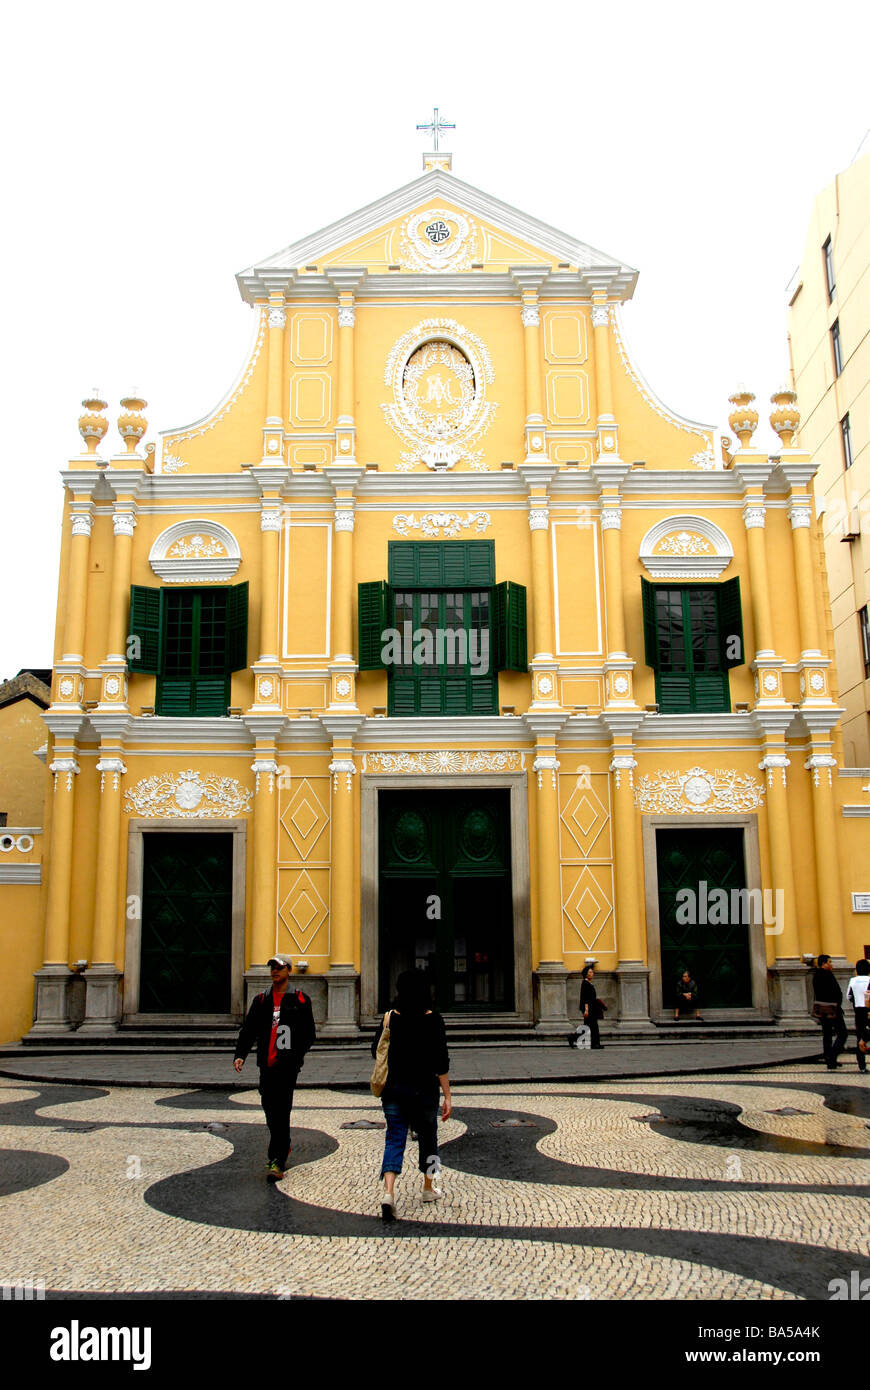 Saint Dominic' s church, Macau, China Stock Photo